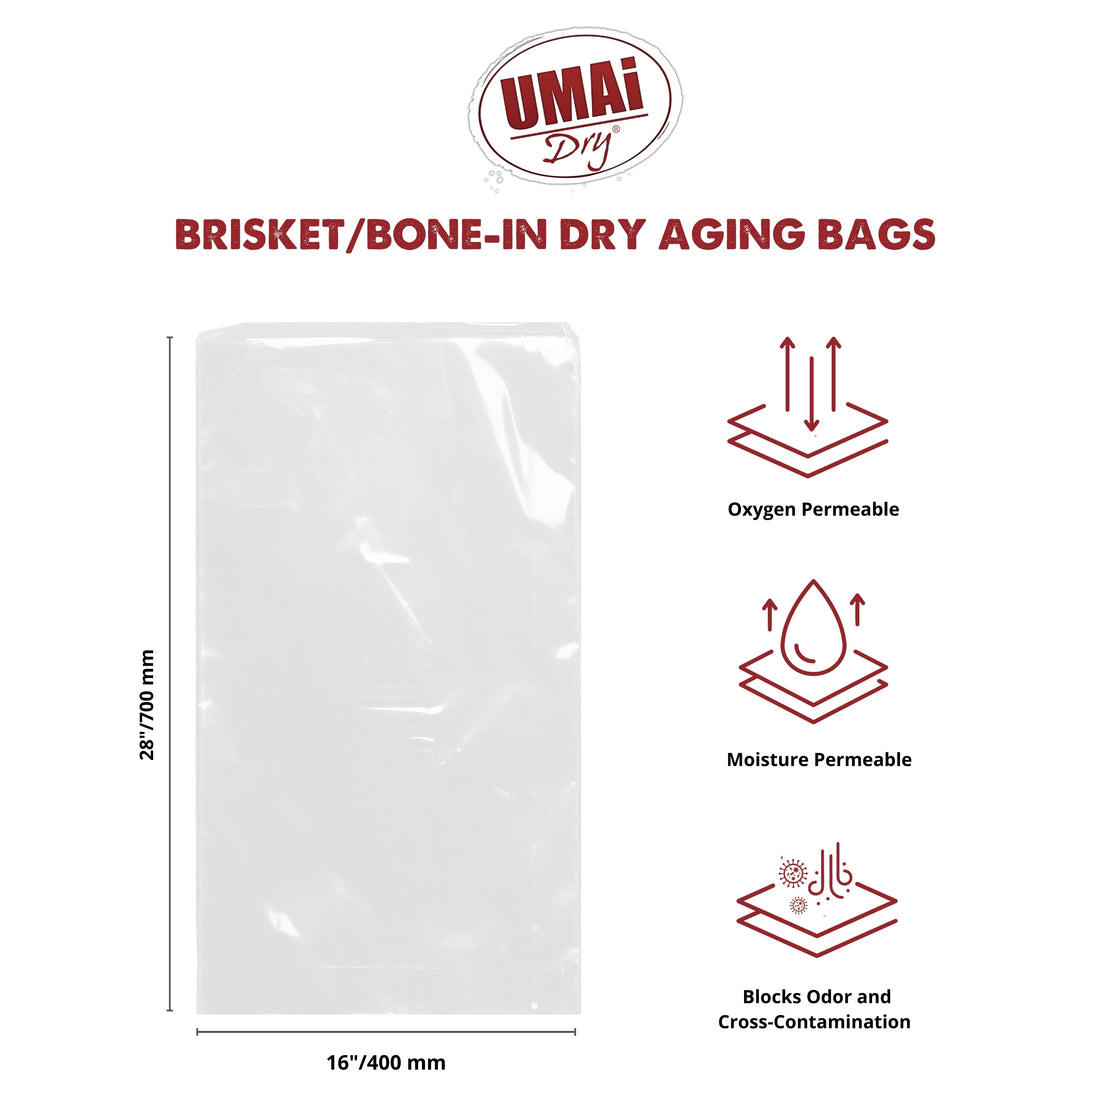 UMAi Dry brisket bone-in dry aged steak bags